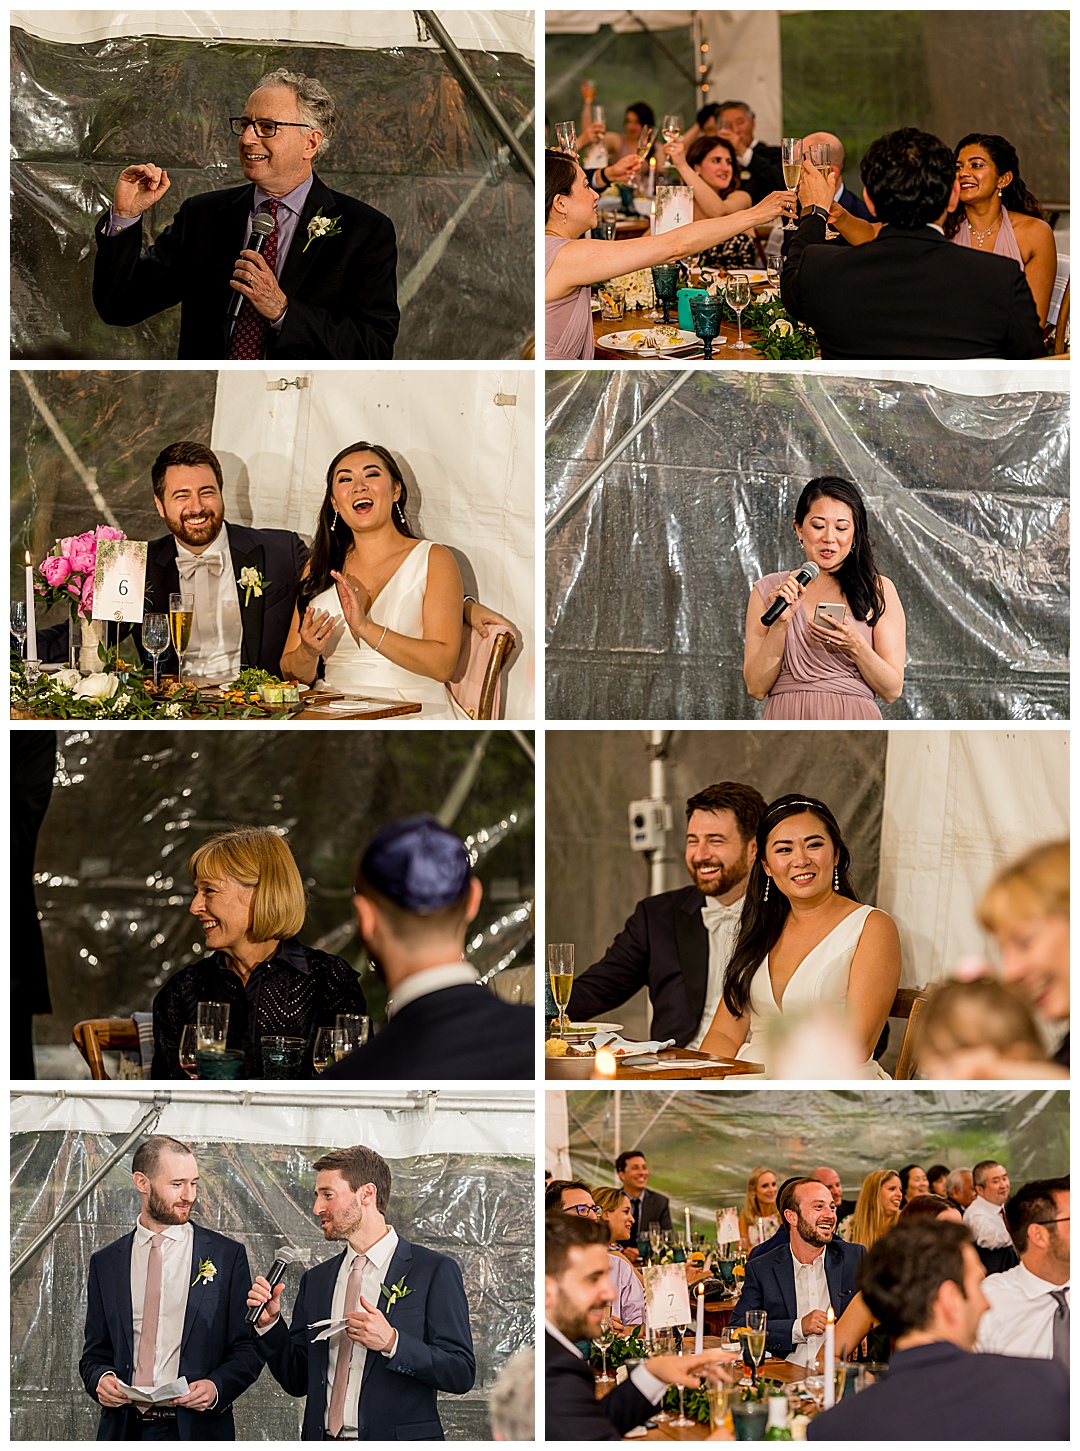 toasts and parent dance at tent wedding grafton inn